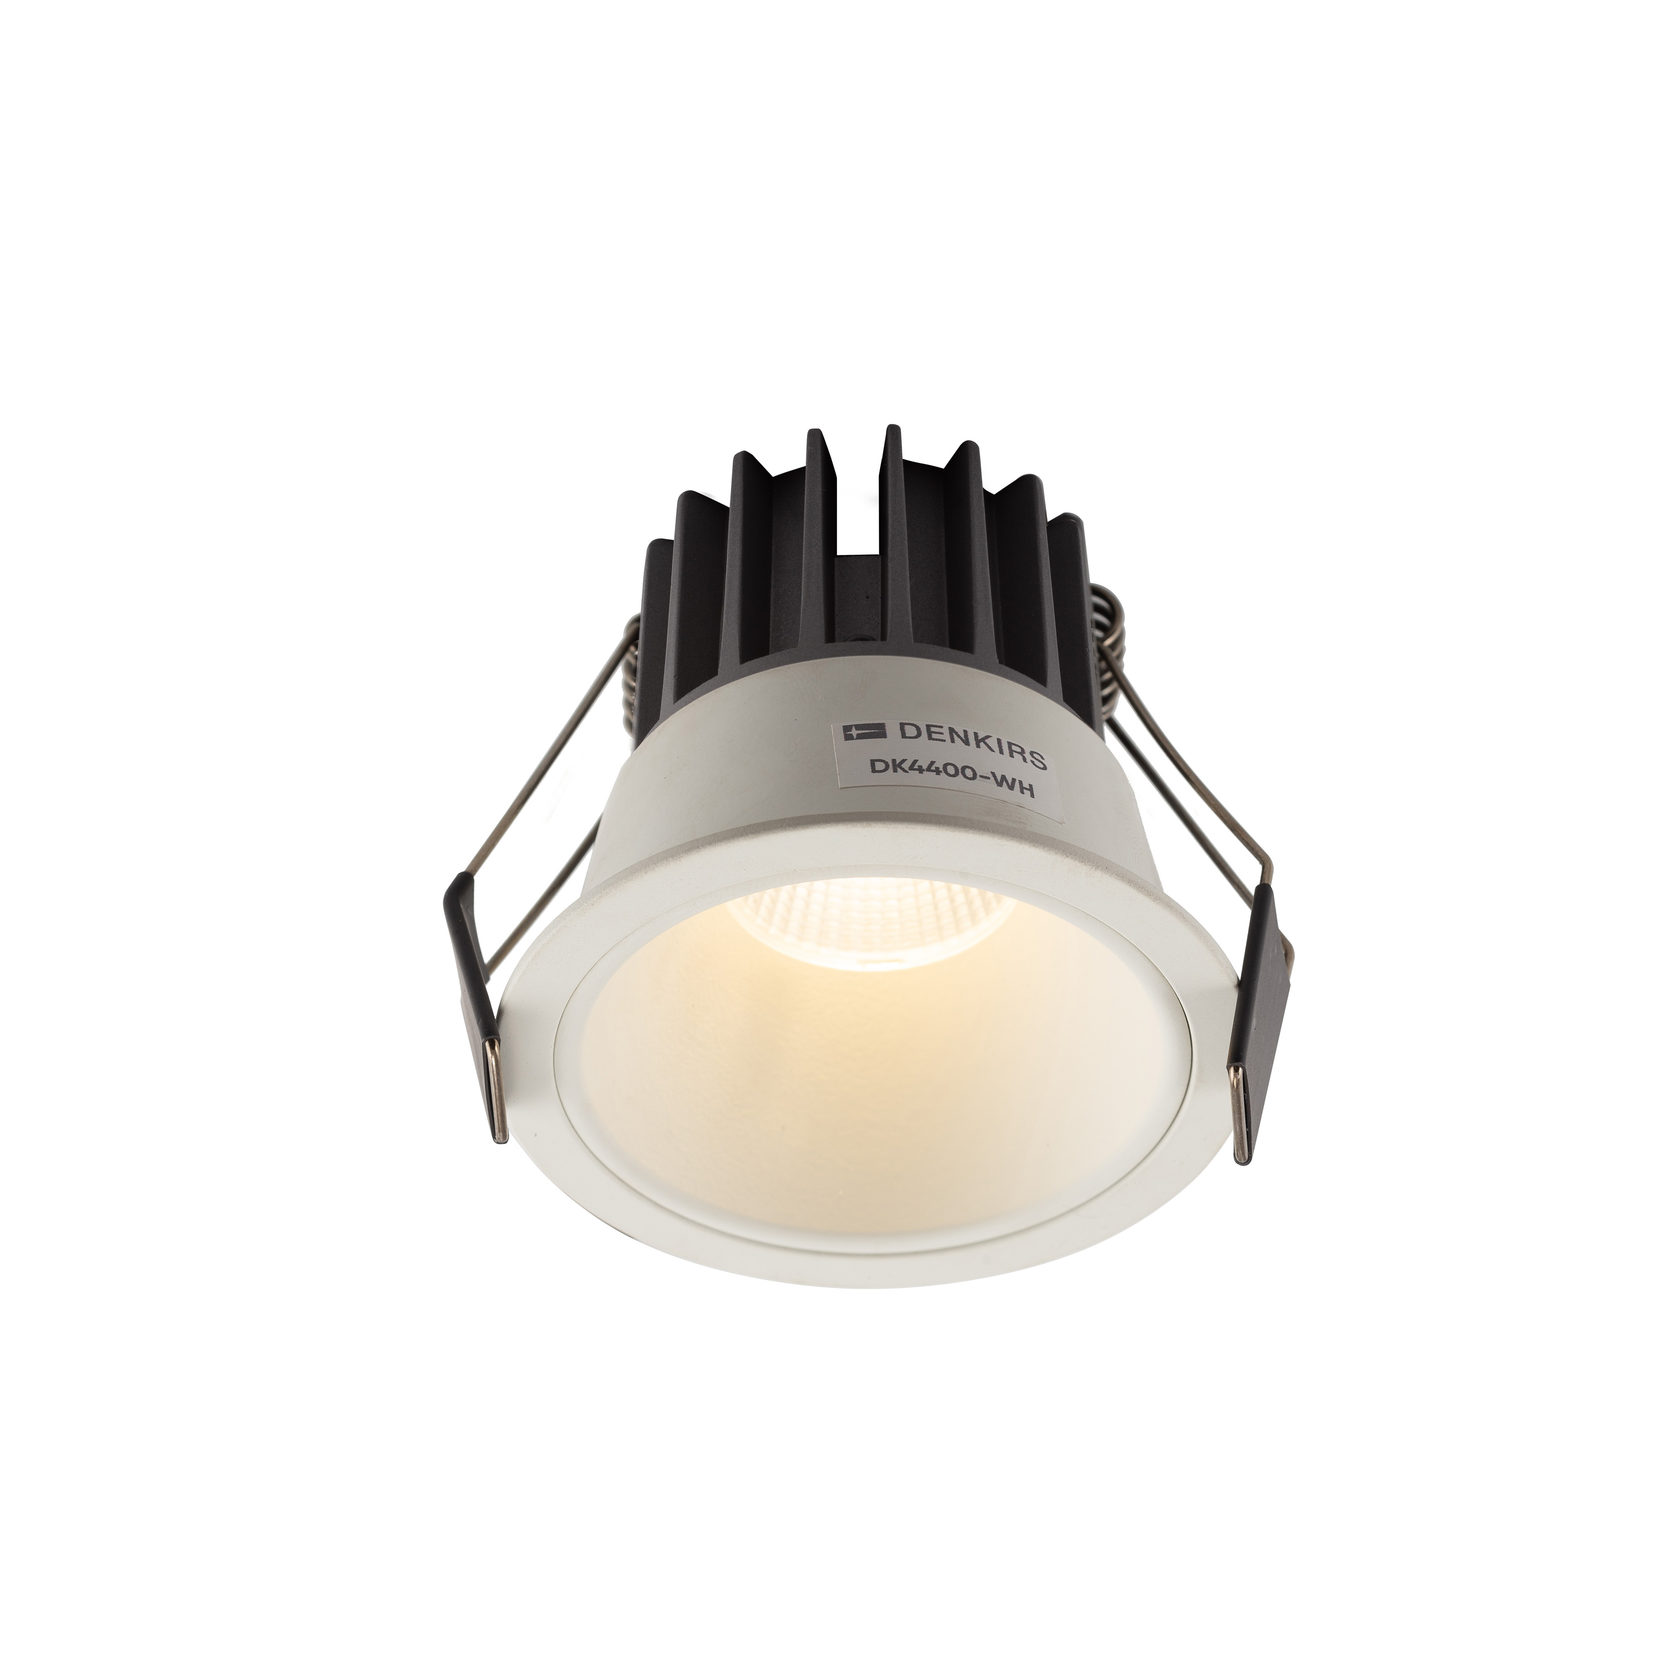 Встраиваемый светильник LED 3000 белый алюминий Denkirs DK4400-WH DK4400-WH